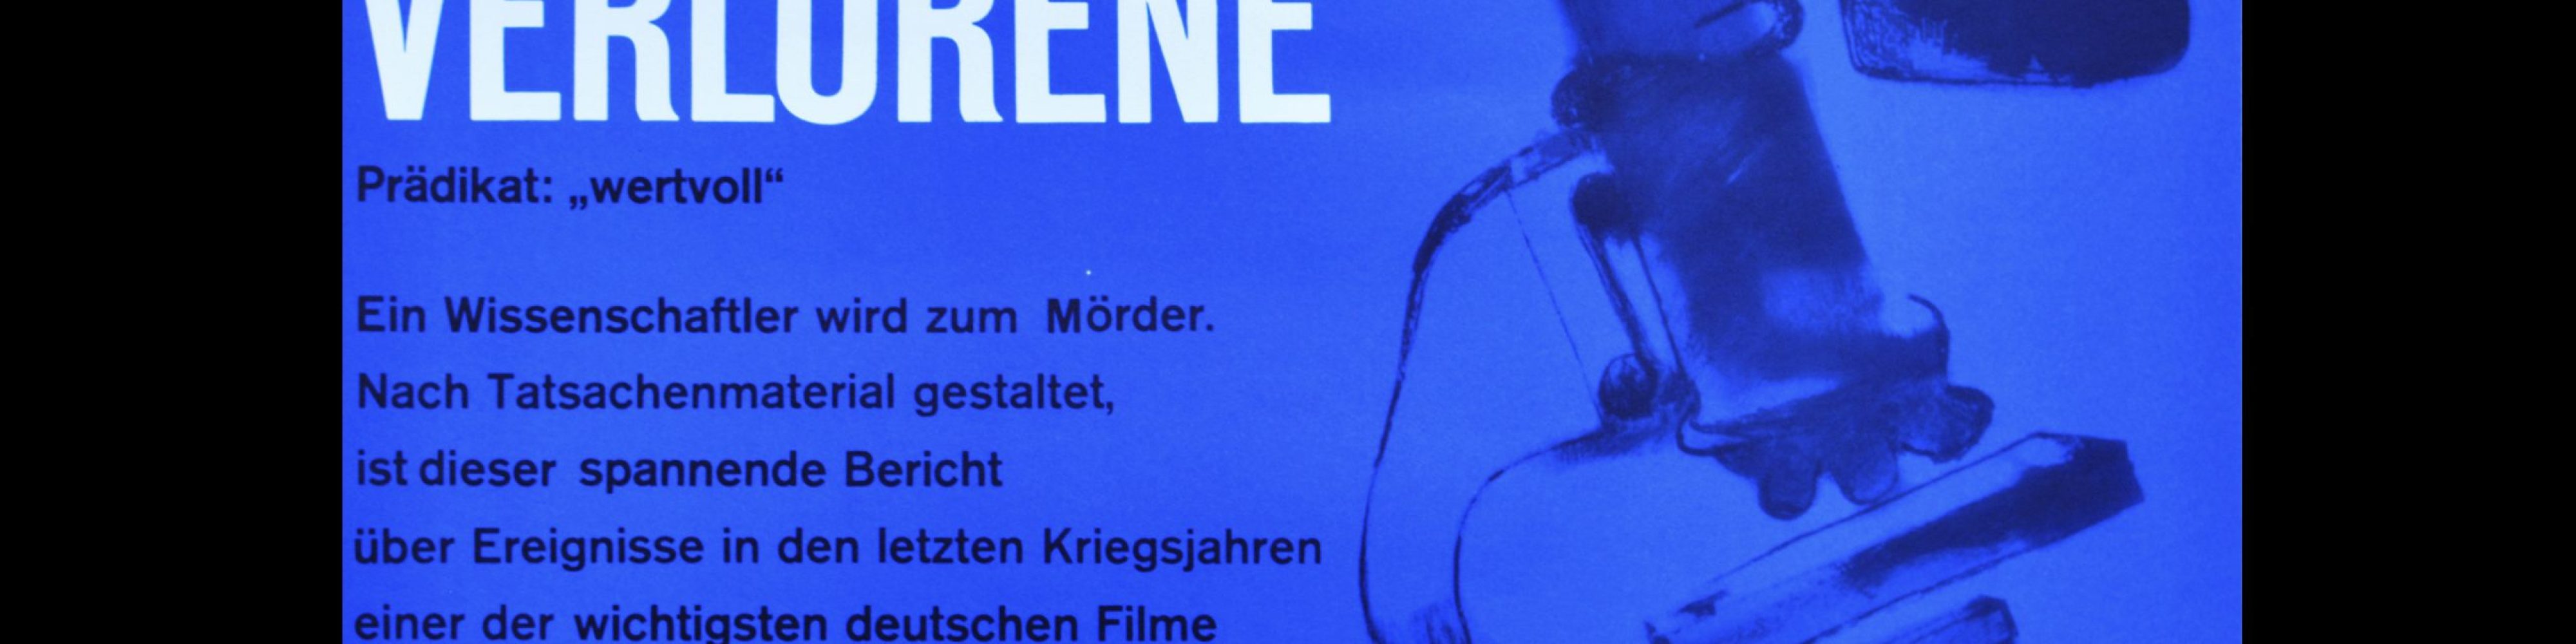 Der Verlorene, Atlas Films Poster, 1960s. Designed by Karl Oskar Blase